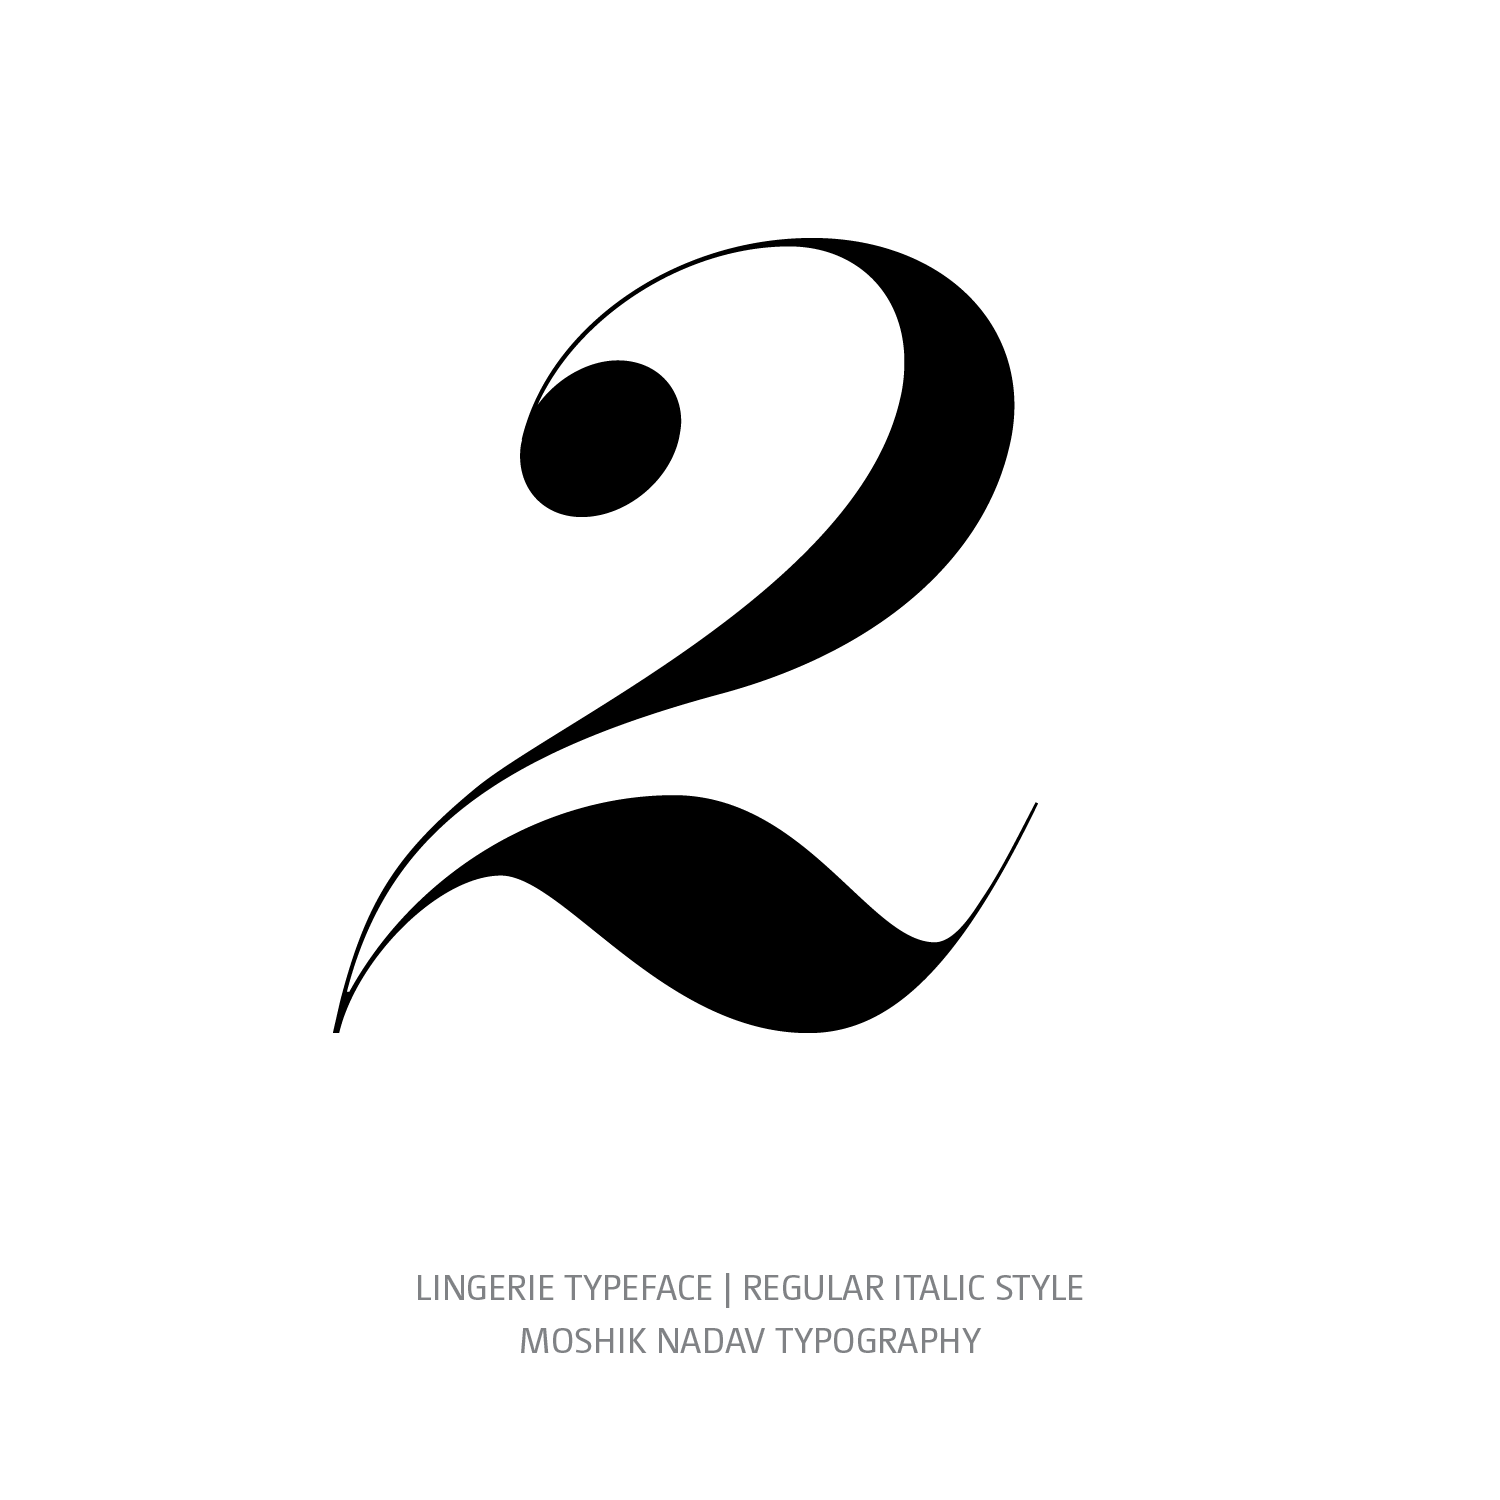 Lingerie Typeface Regular Italic 2 - Fashion fonts by Moshik Nadav Typography